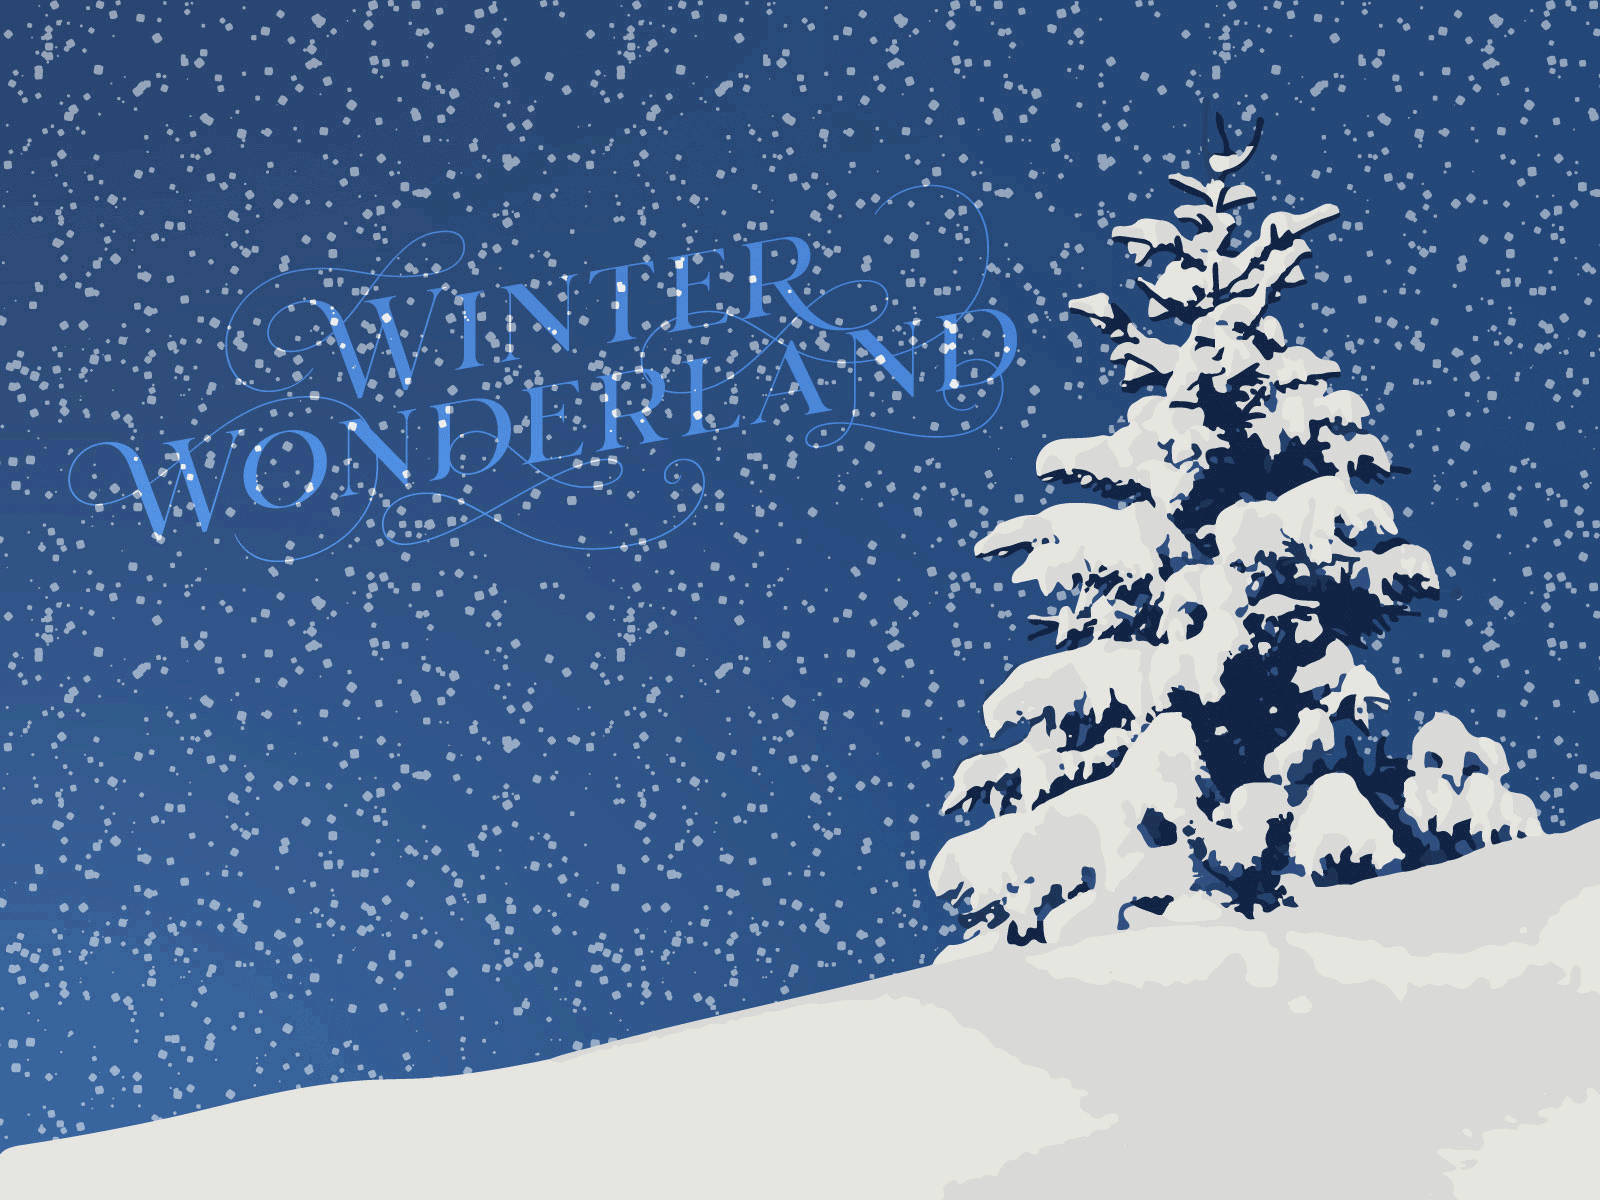 Winter Wonderland | Weekly Warm-up by Haley Franker Siska on Dribbble